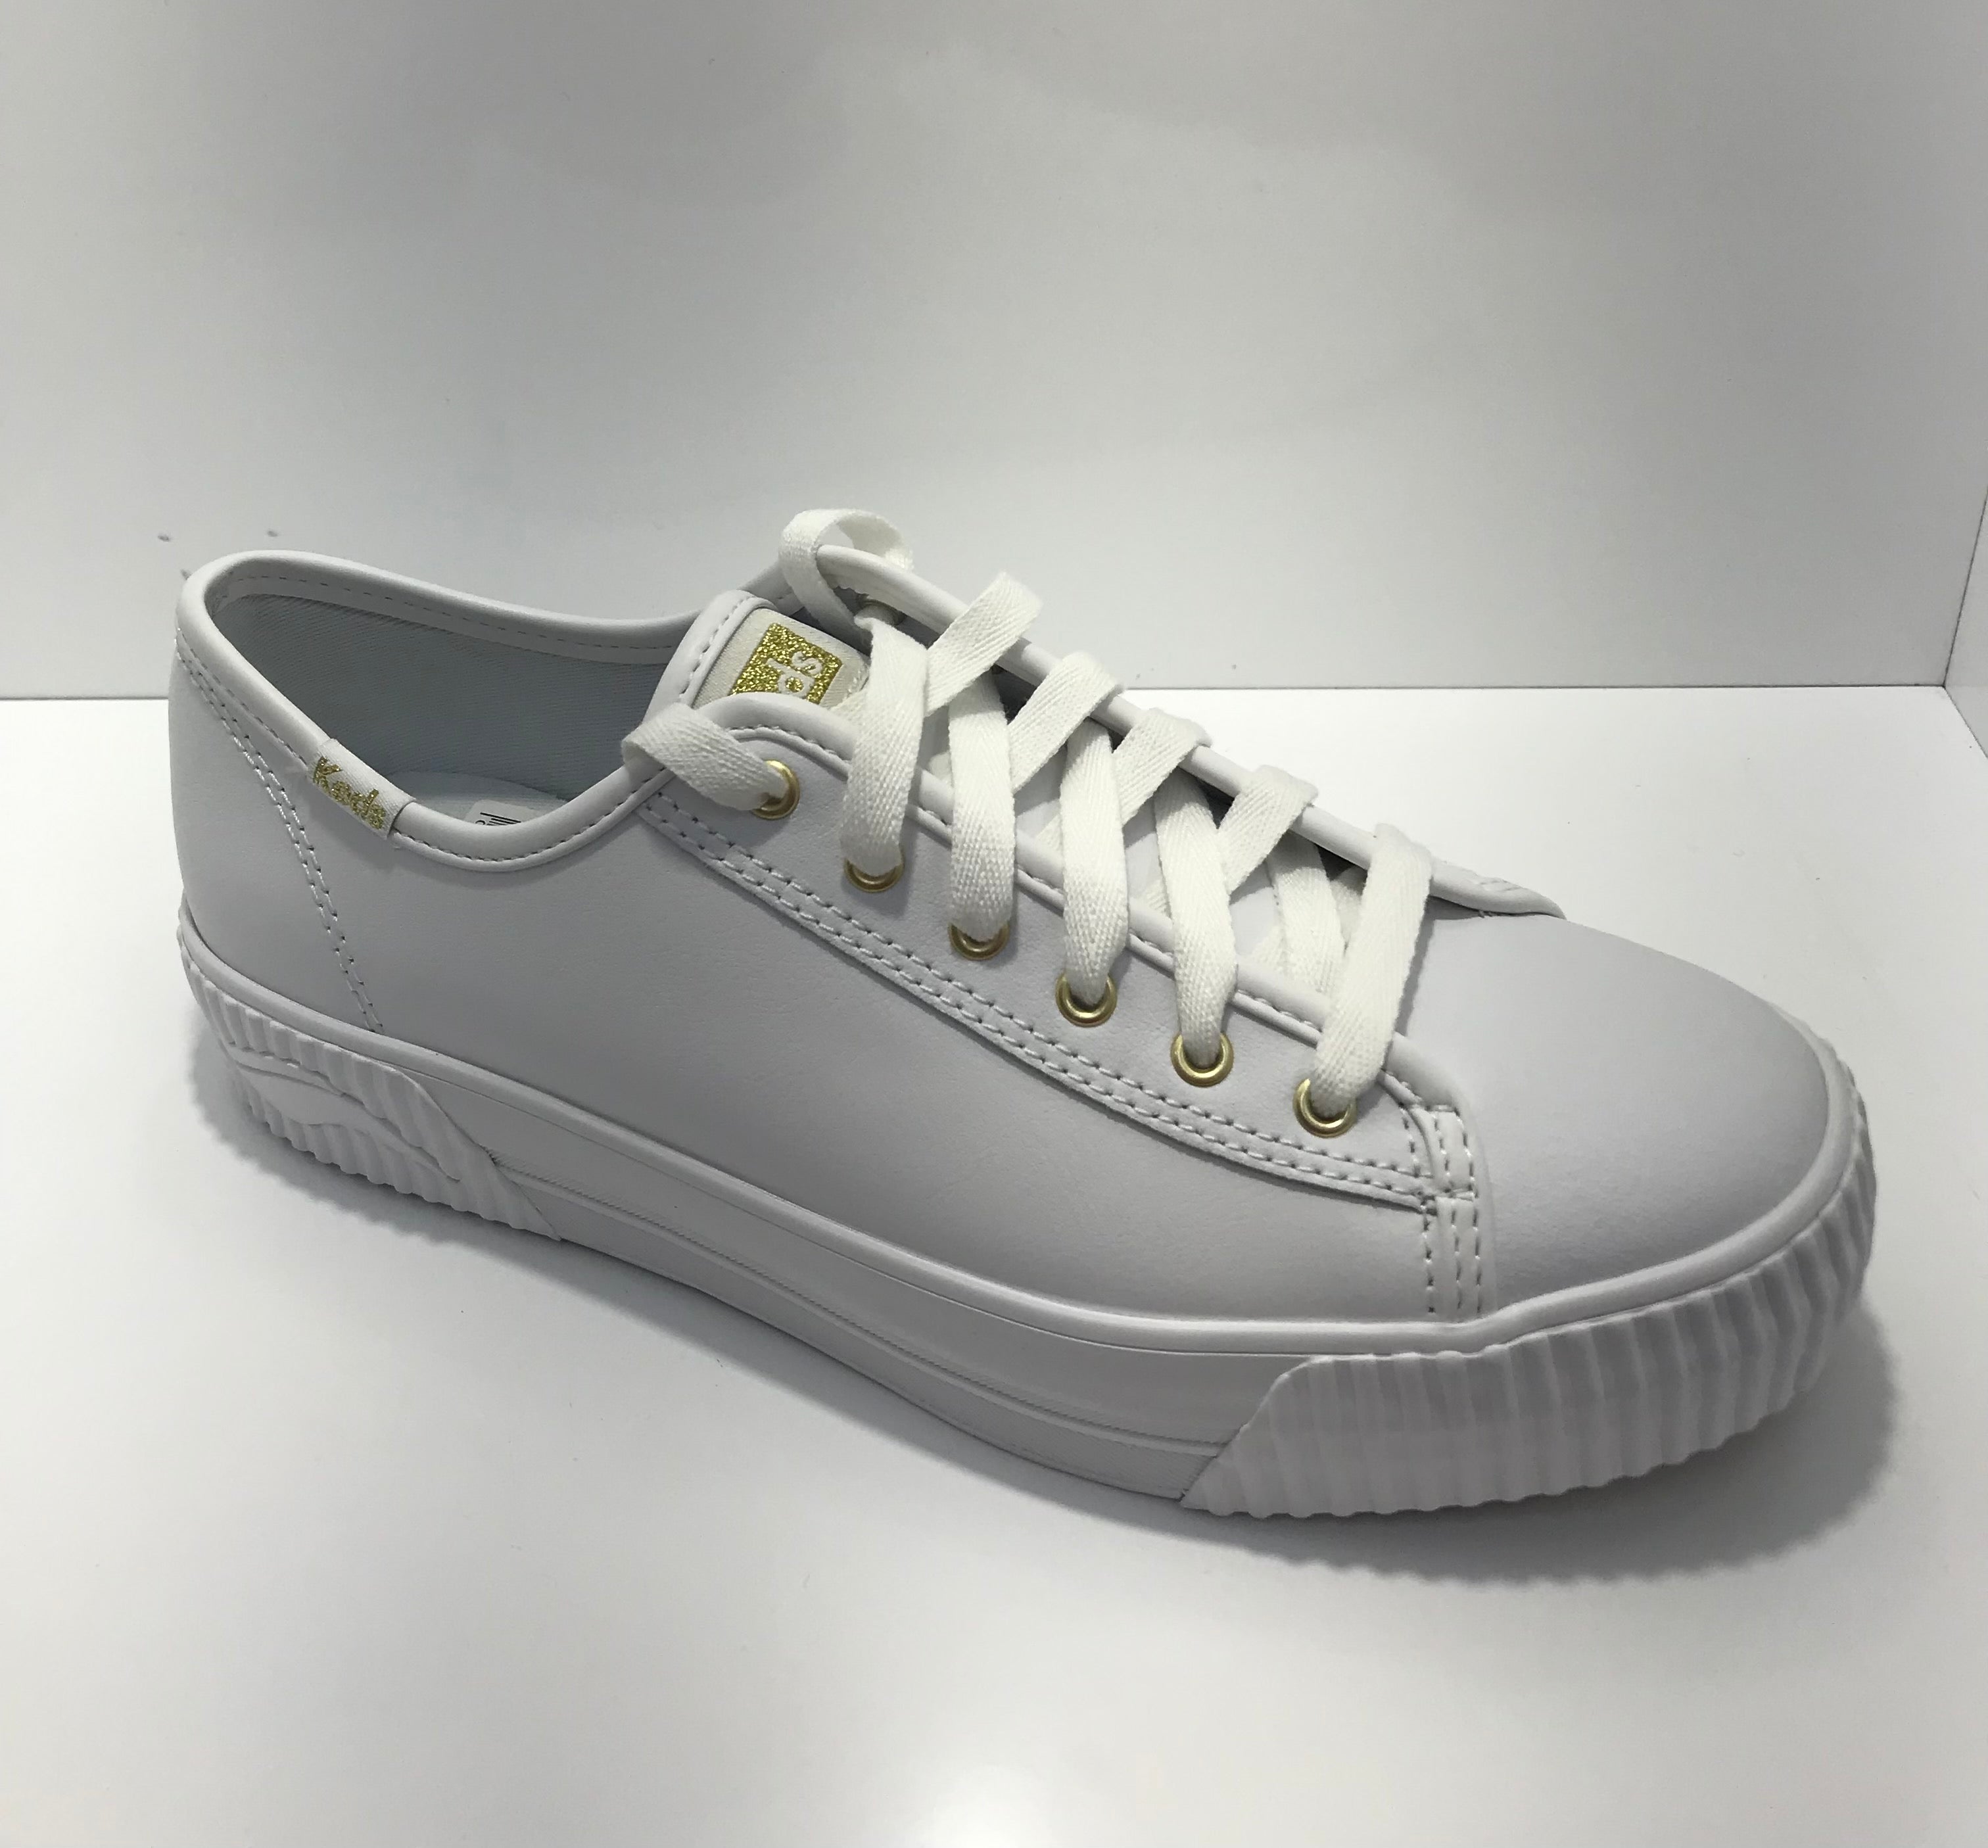 Keds Triple Kick Amp  Leather Sneaker WH64550